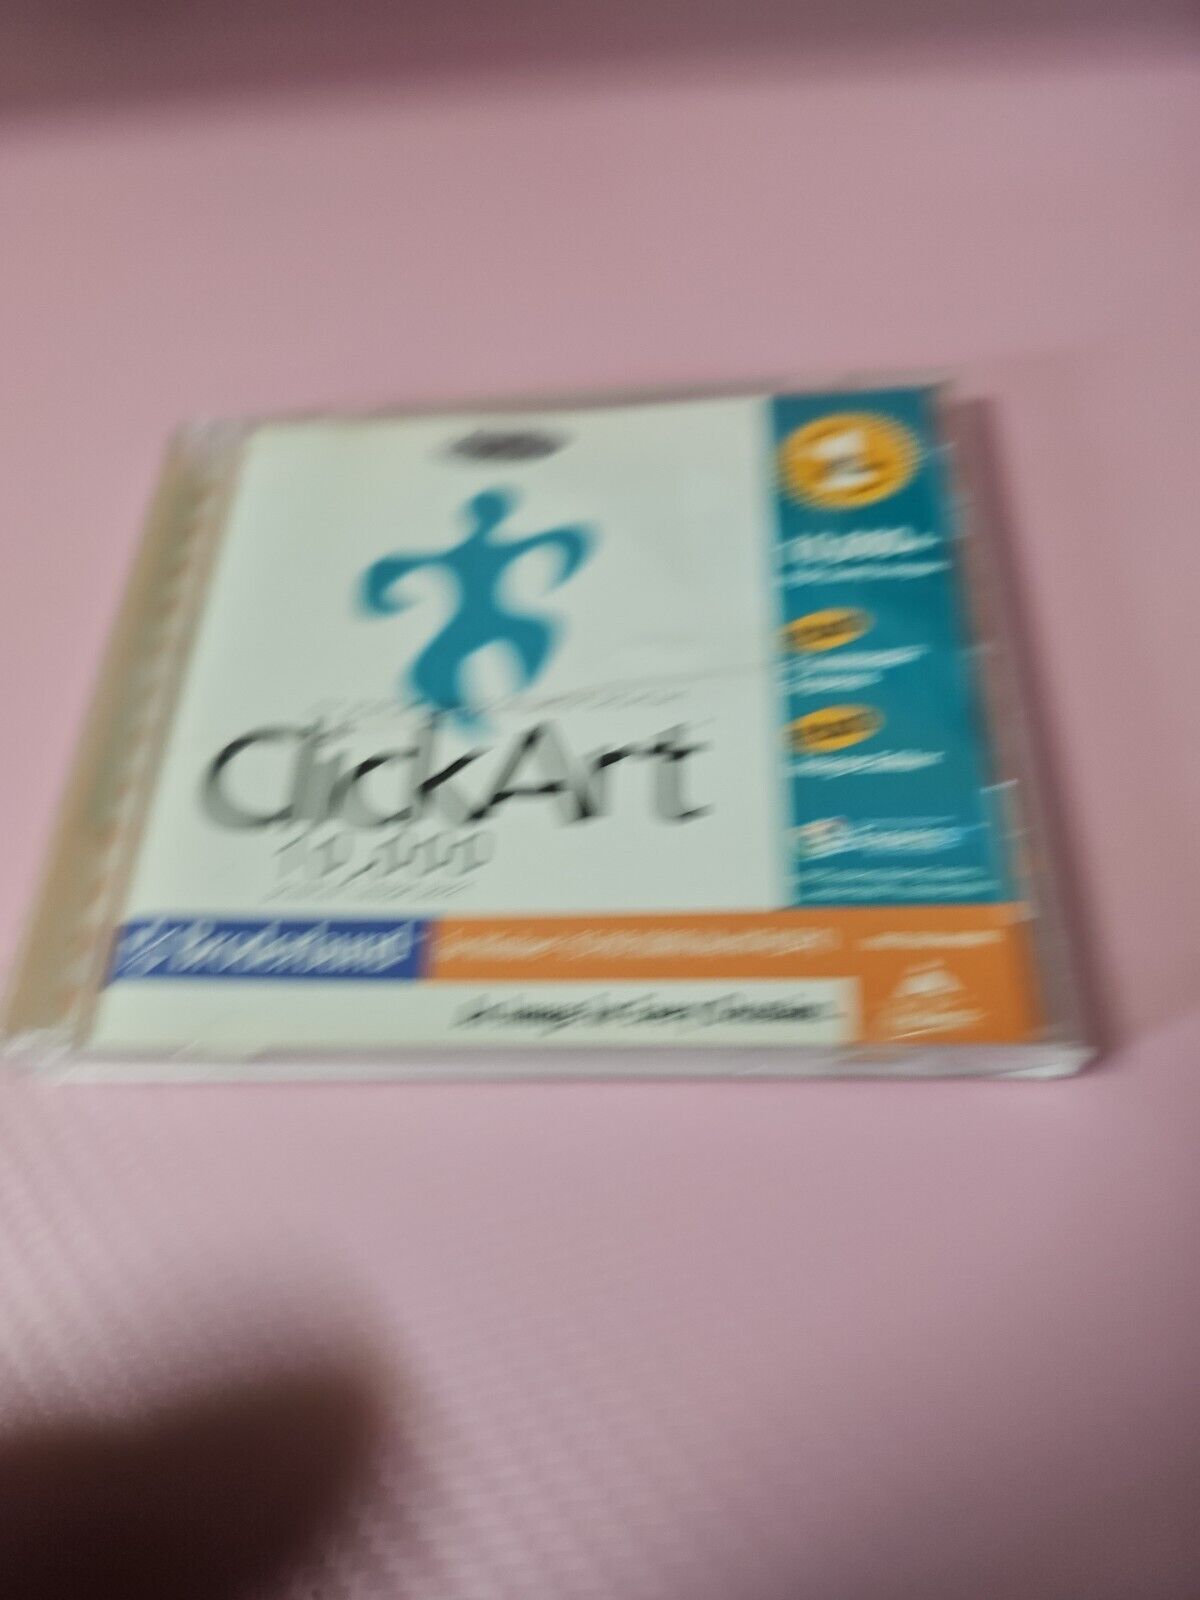 ClickArt 10,000 Smart Saver Broderbund 2001 PC windows NIP AOL PC ROM